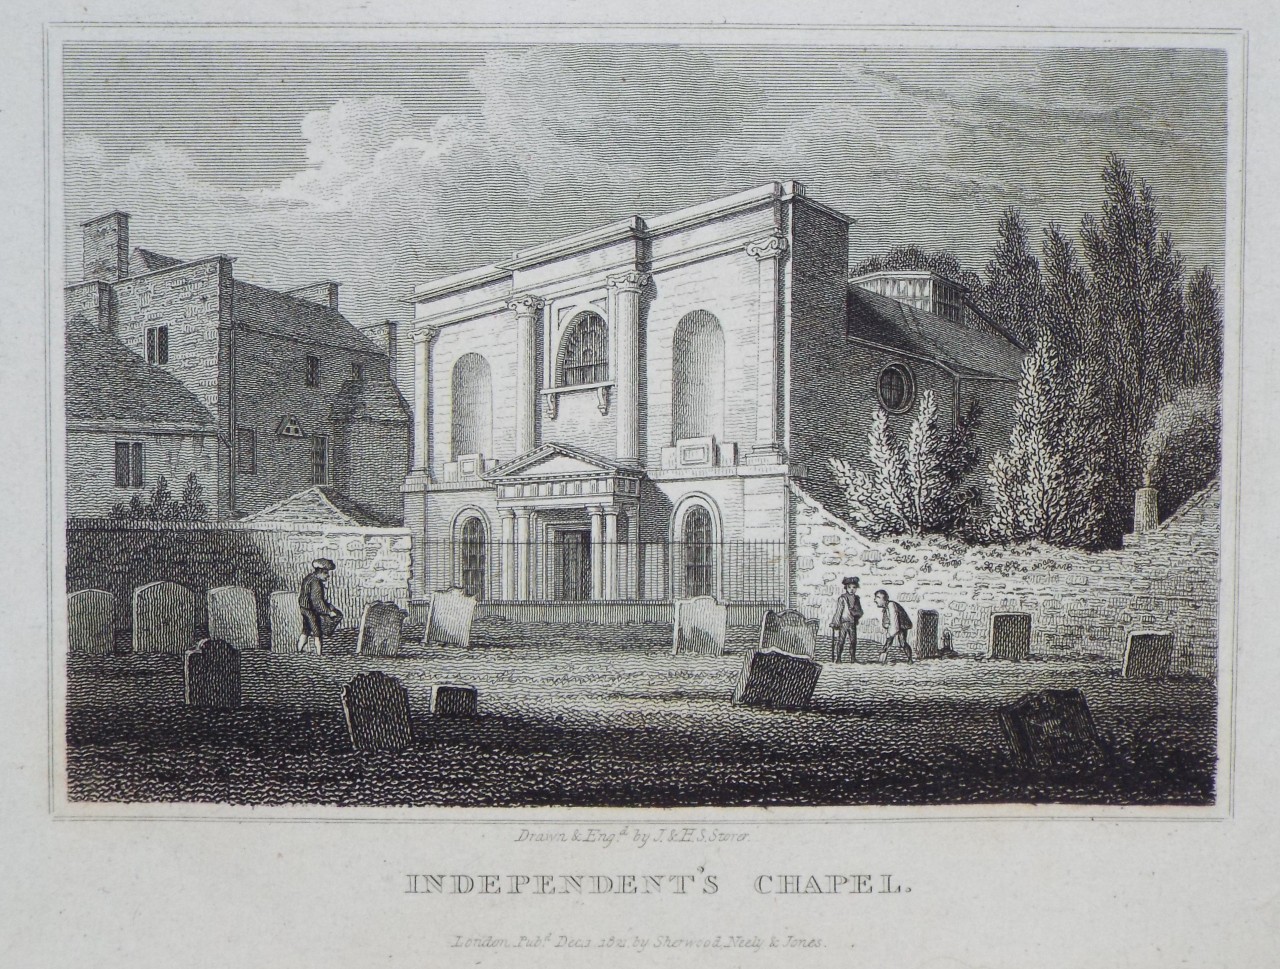 Print - Independent's Chapel. - Storer